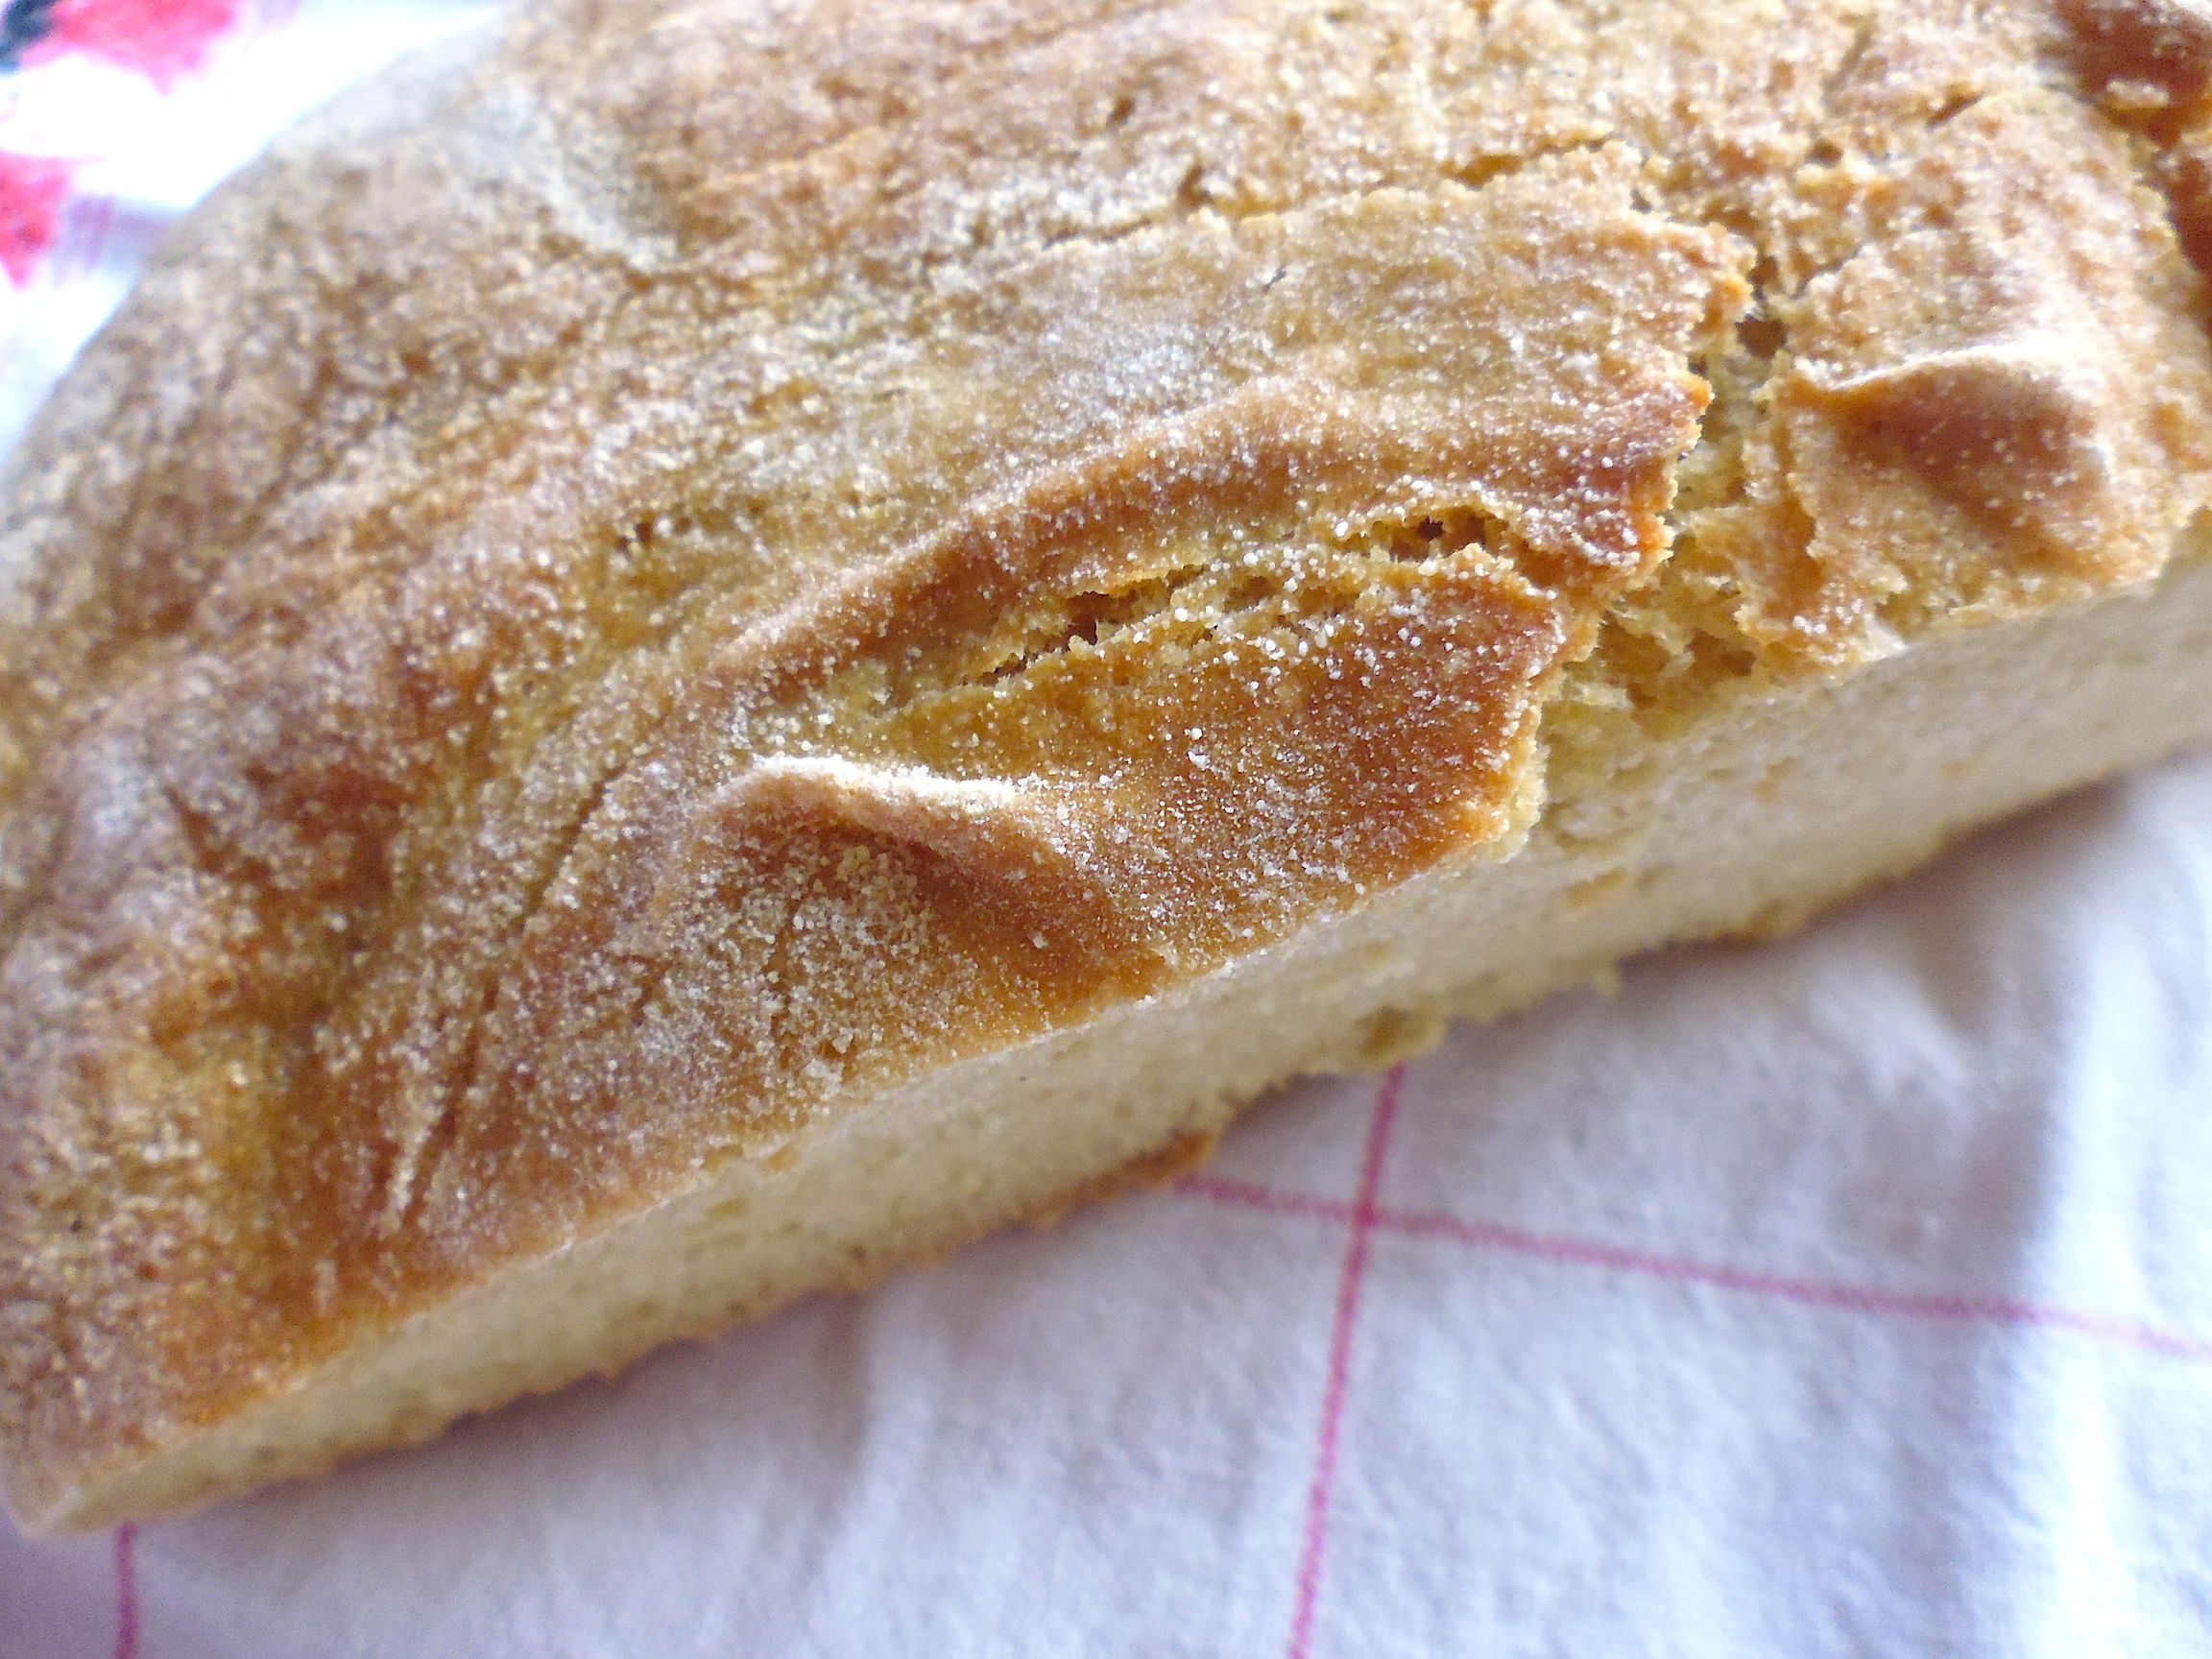 No-Knead Whole Wheat Bread with Sorghum Flour